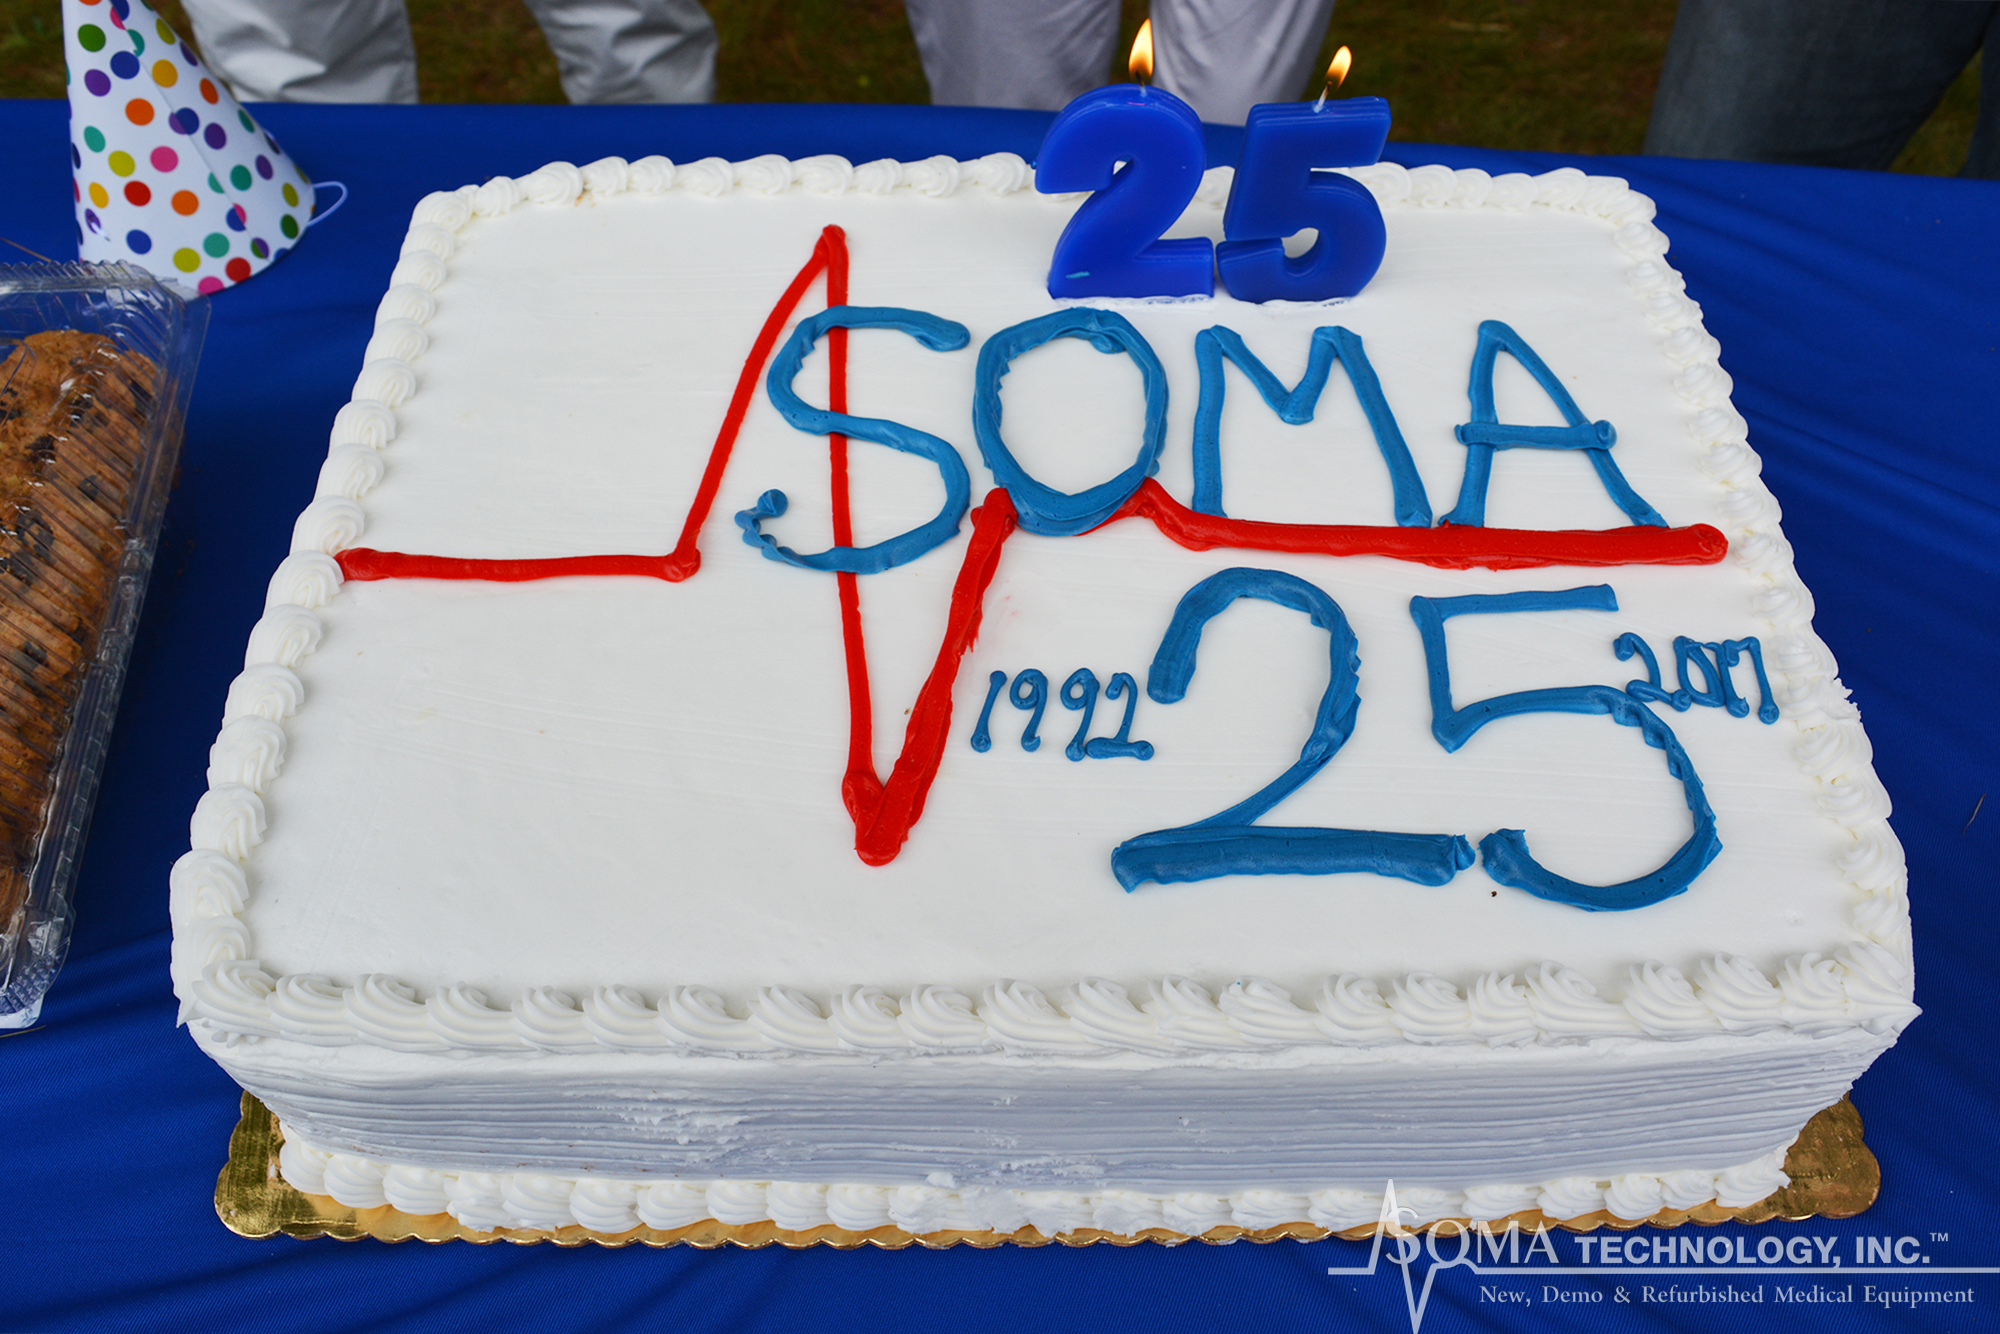 Soma Technology’s 25th Anniversary